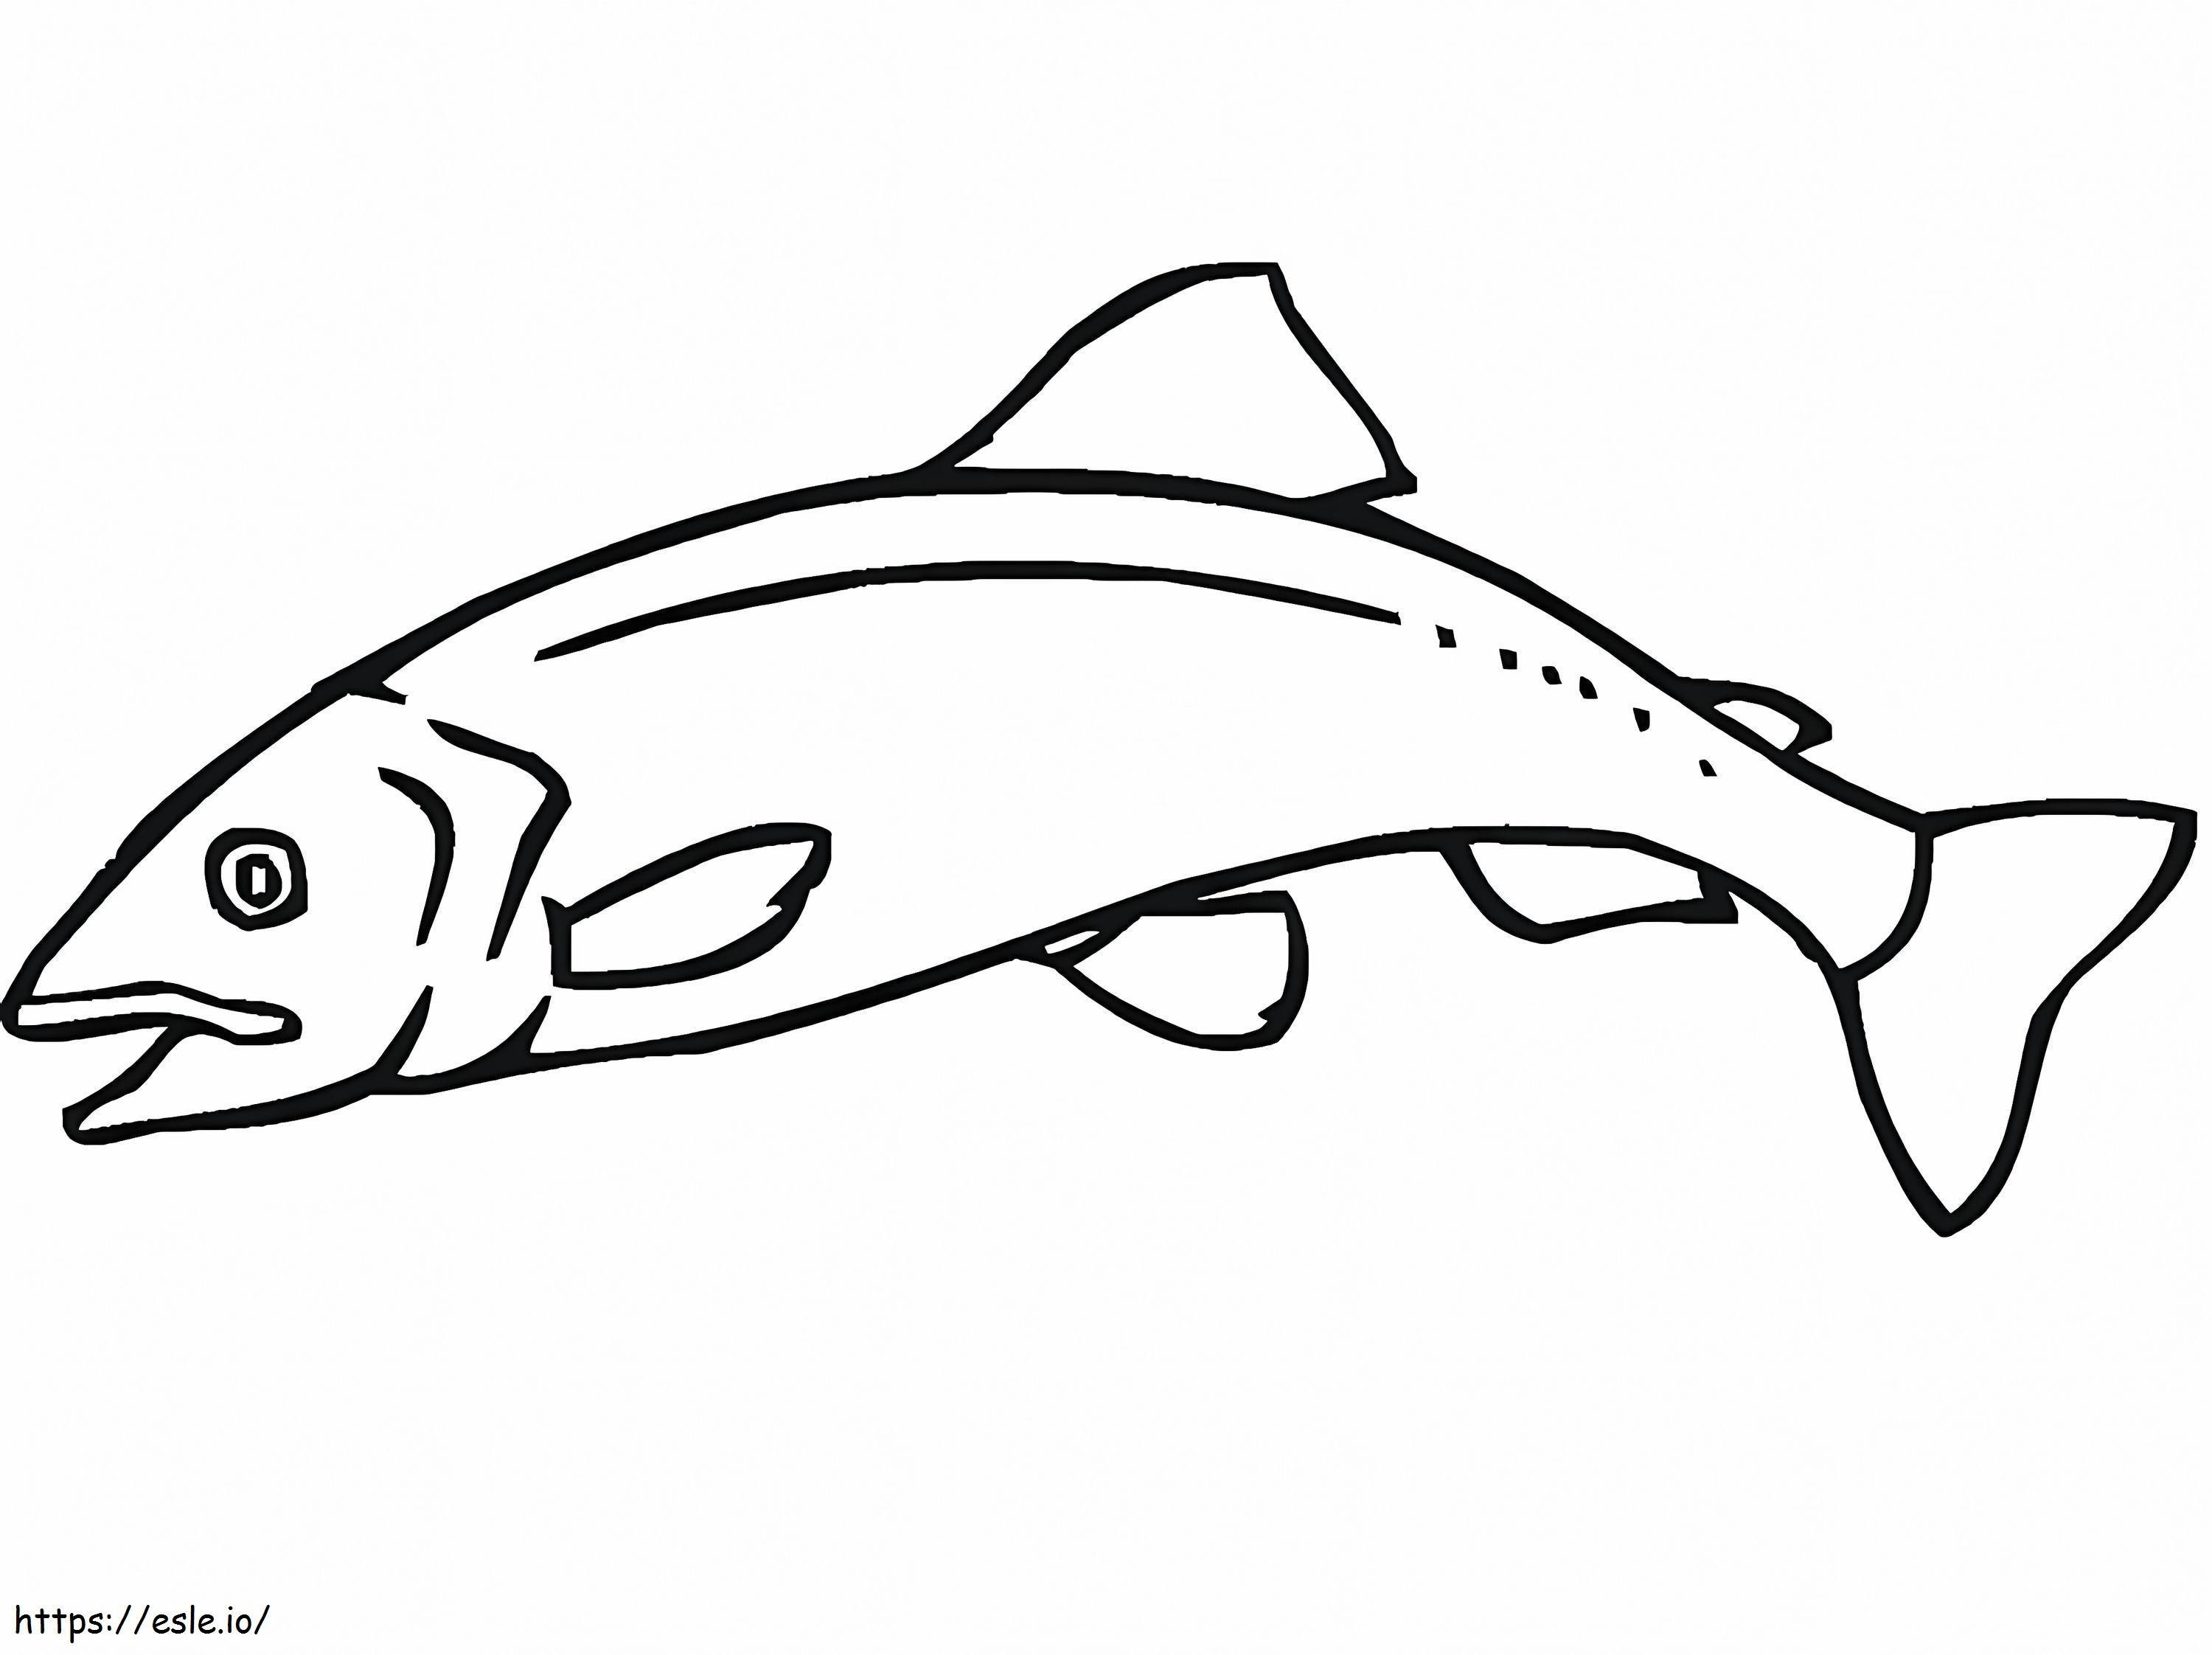 Single Salmon coloring page